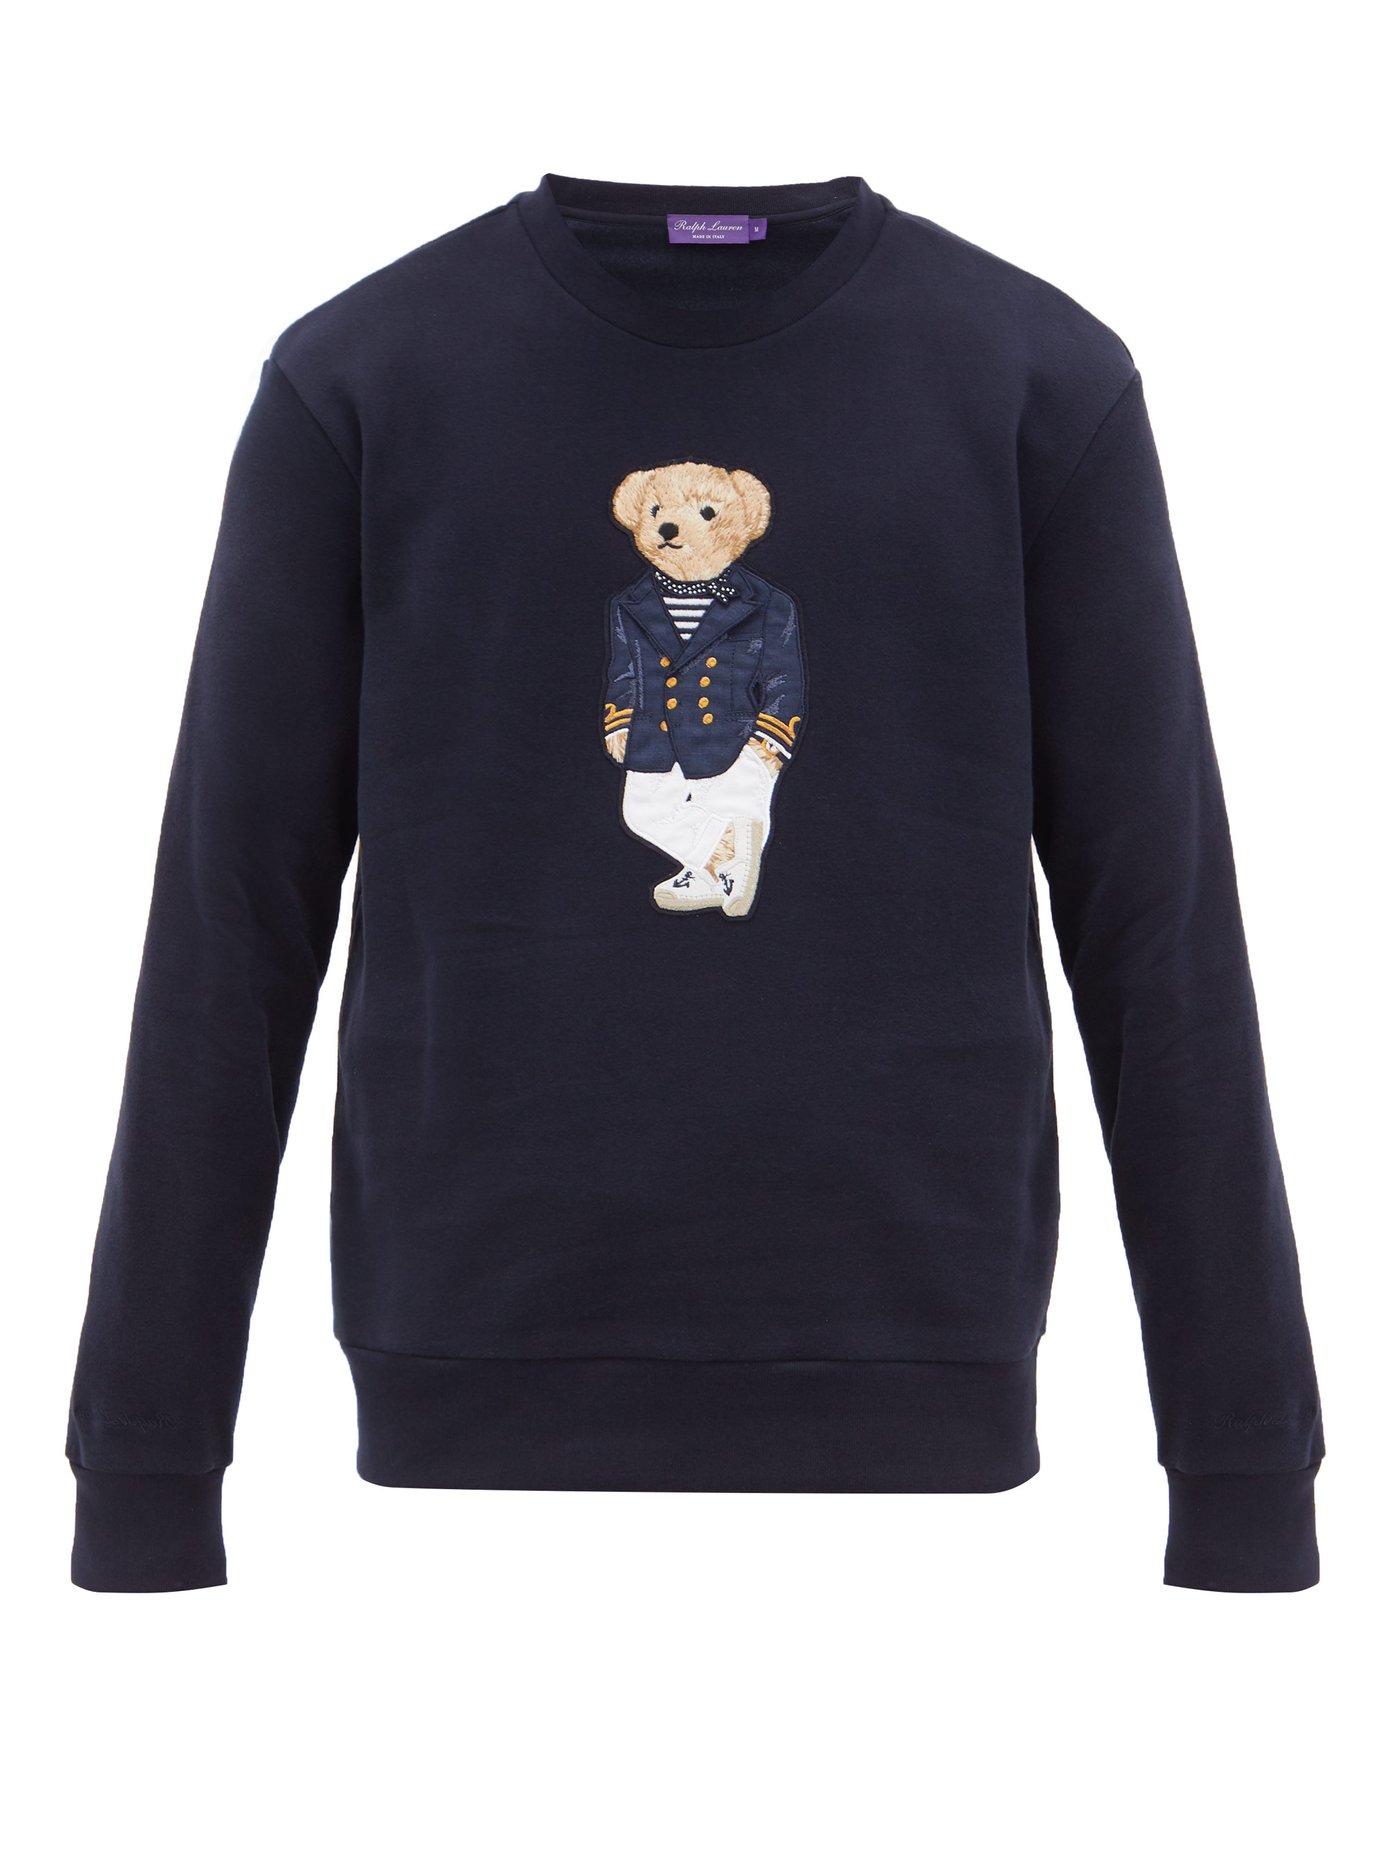 polo bear sweater xxl